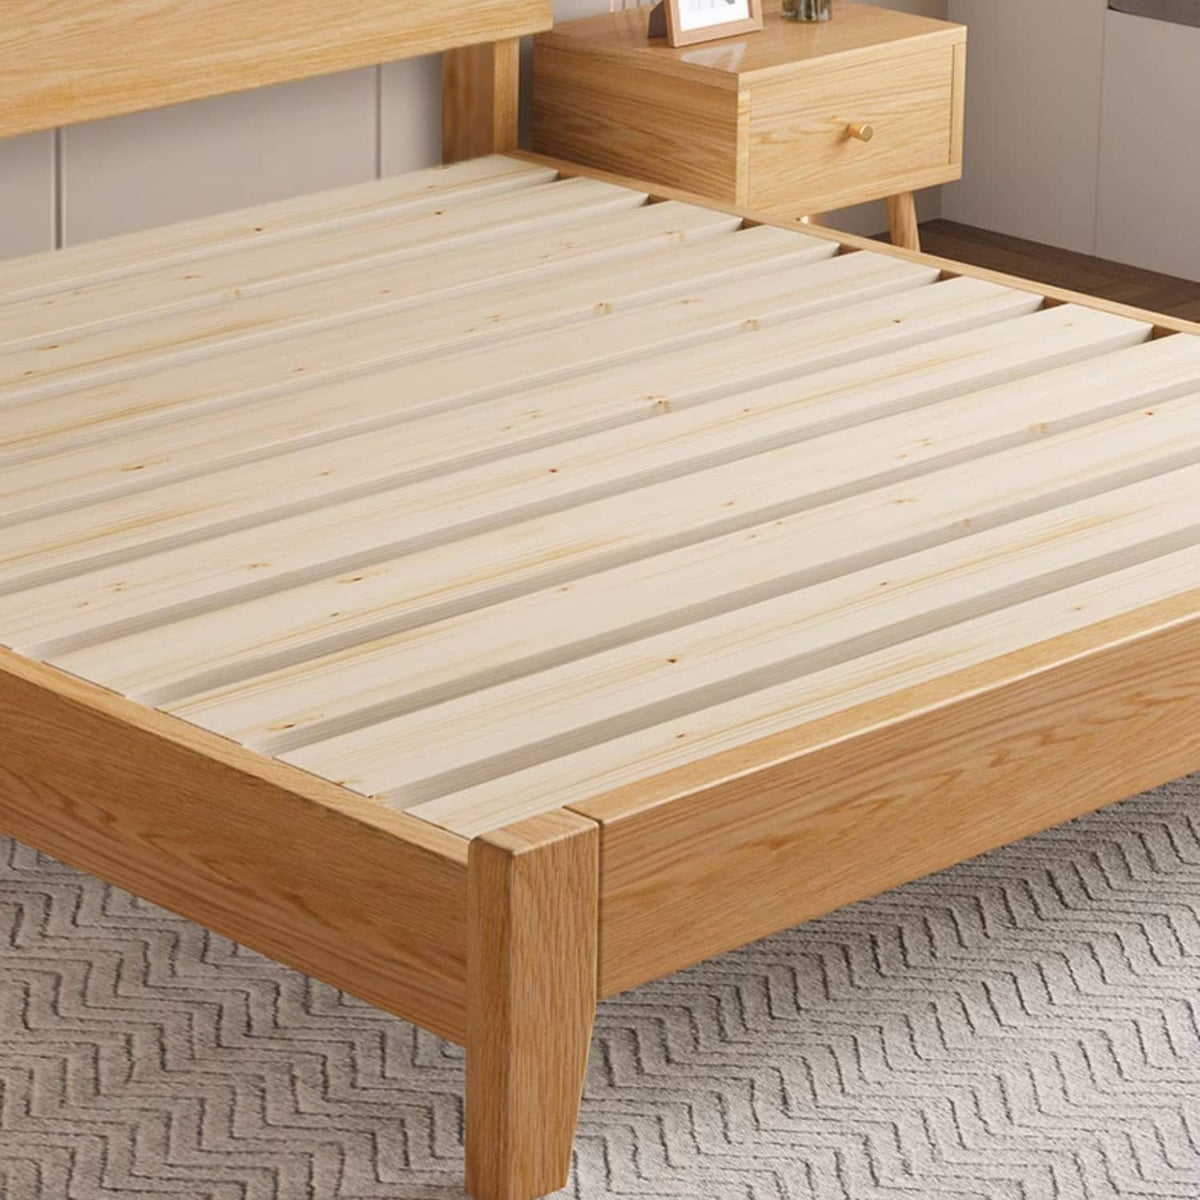 Premium Natural Rubber Wood Pine Bed Frame - Sturdy & Stylish Design hmak-237